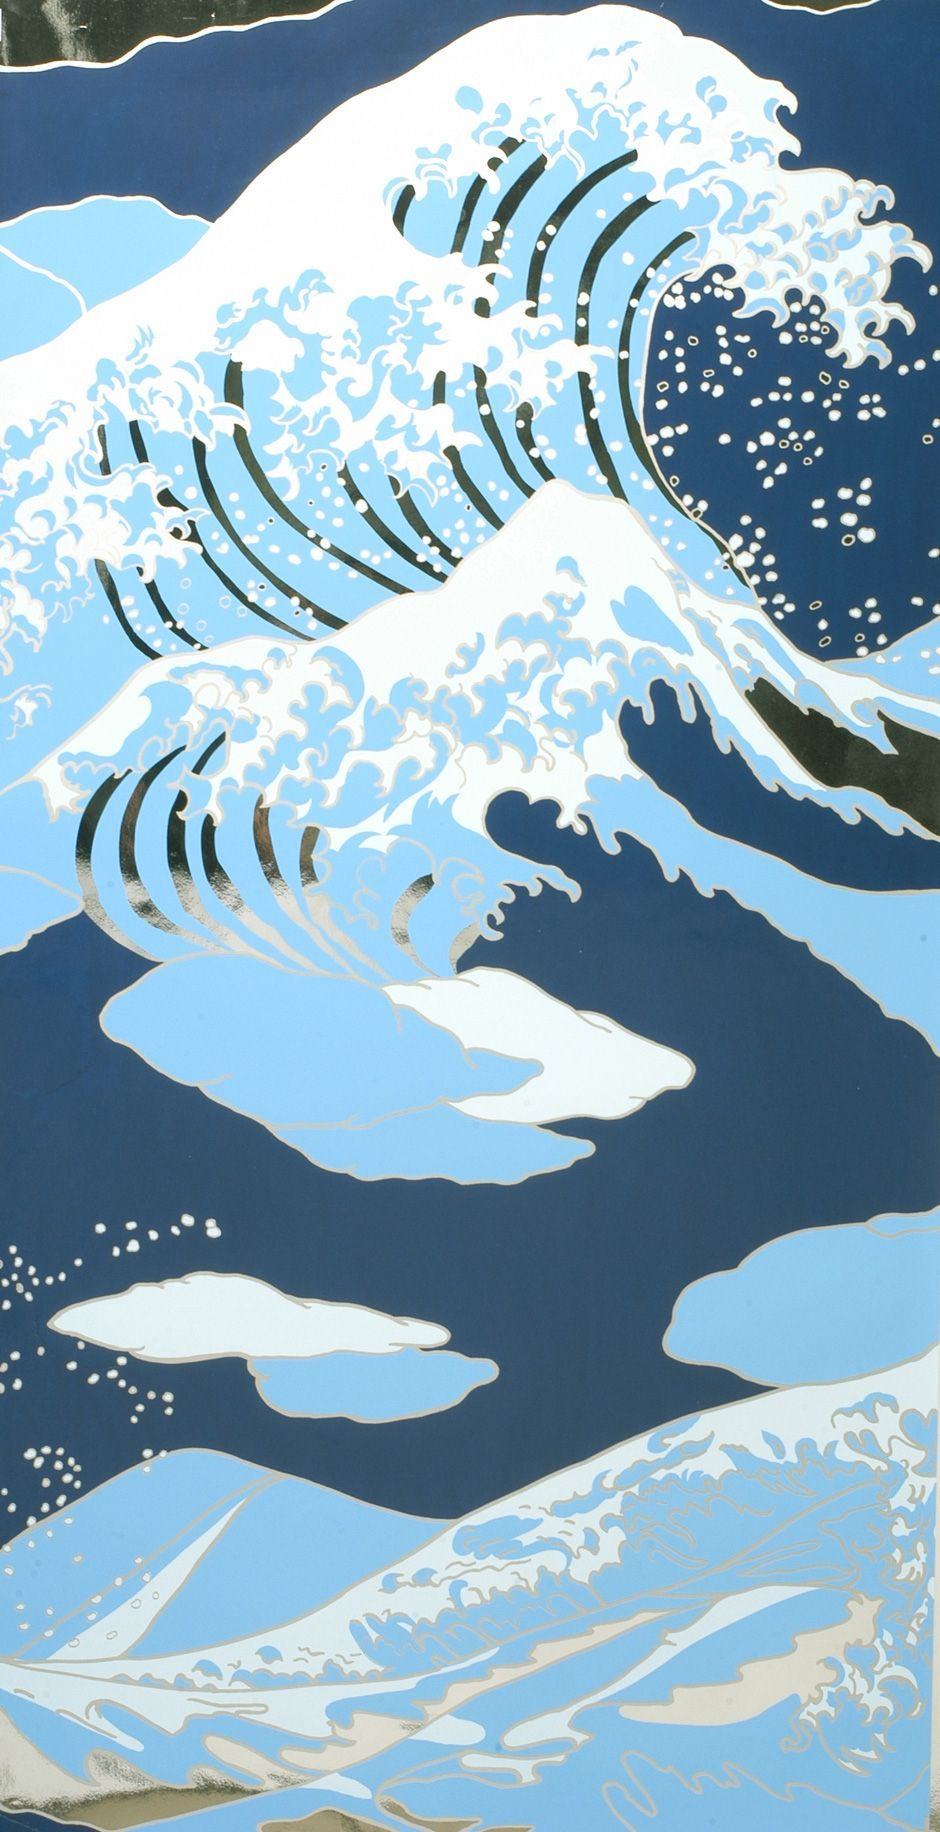 Flavor Paper Onda The Great Wave off Kanagawa Wallpaper Nightshades. Abstract wallpaper, Wallpaper, Great wave